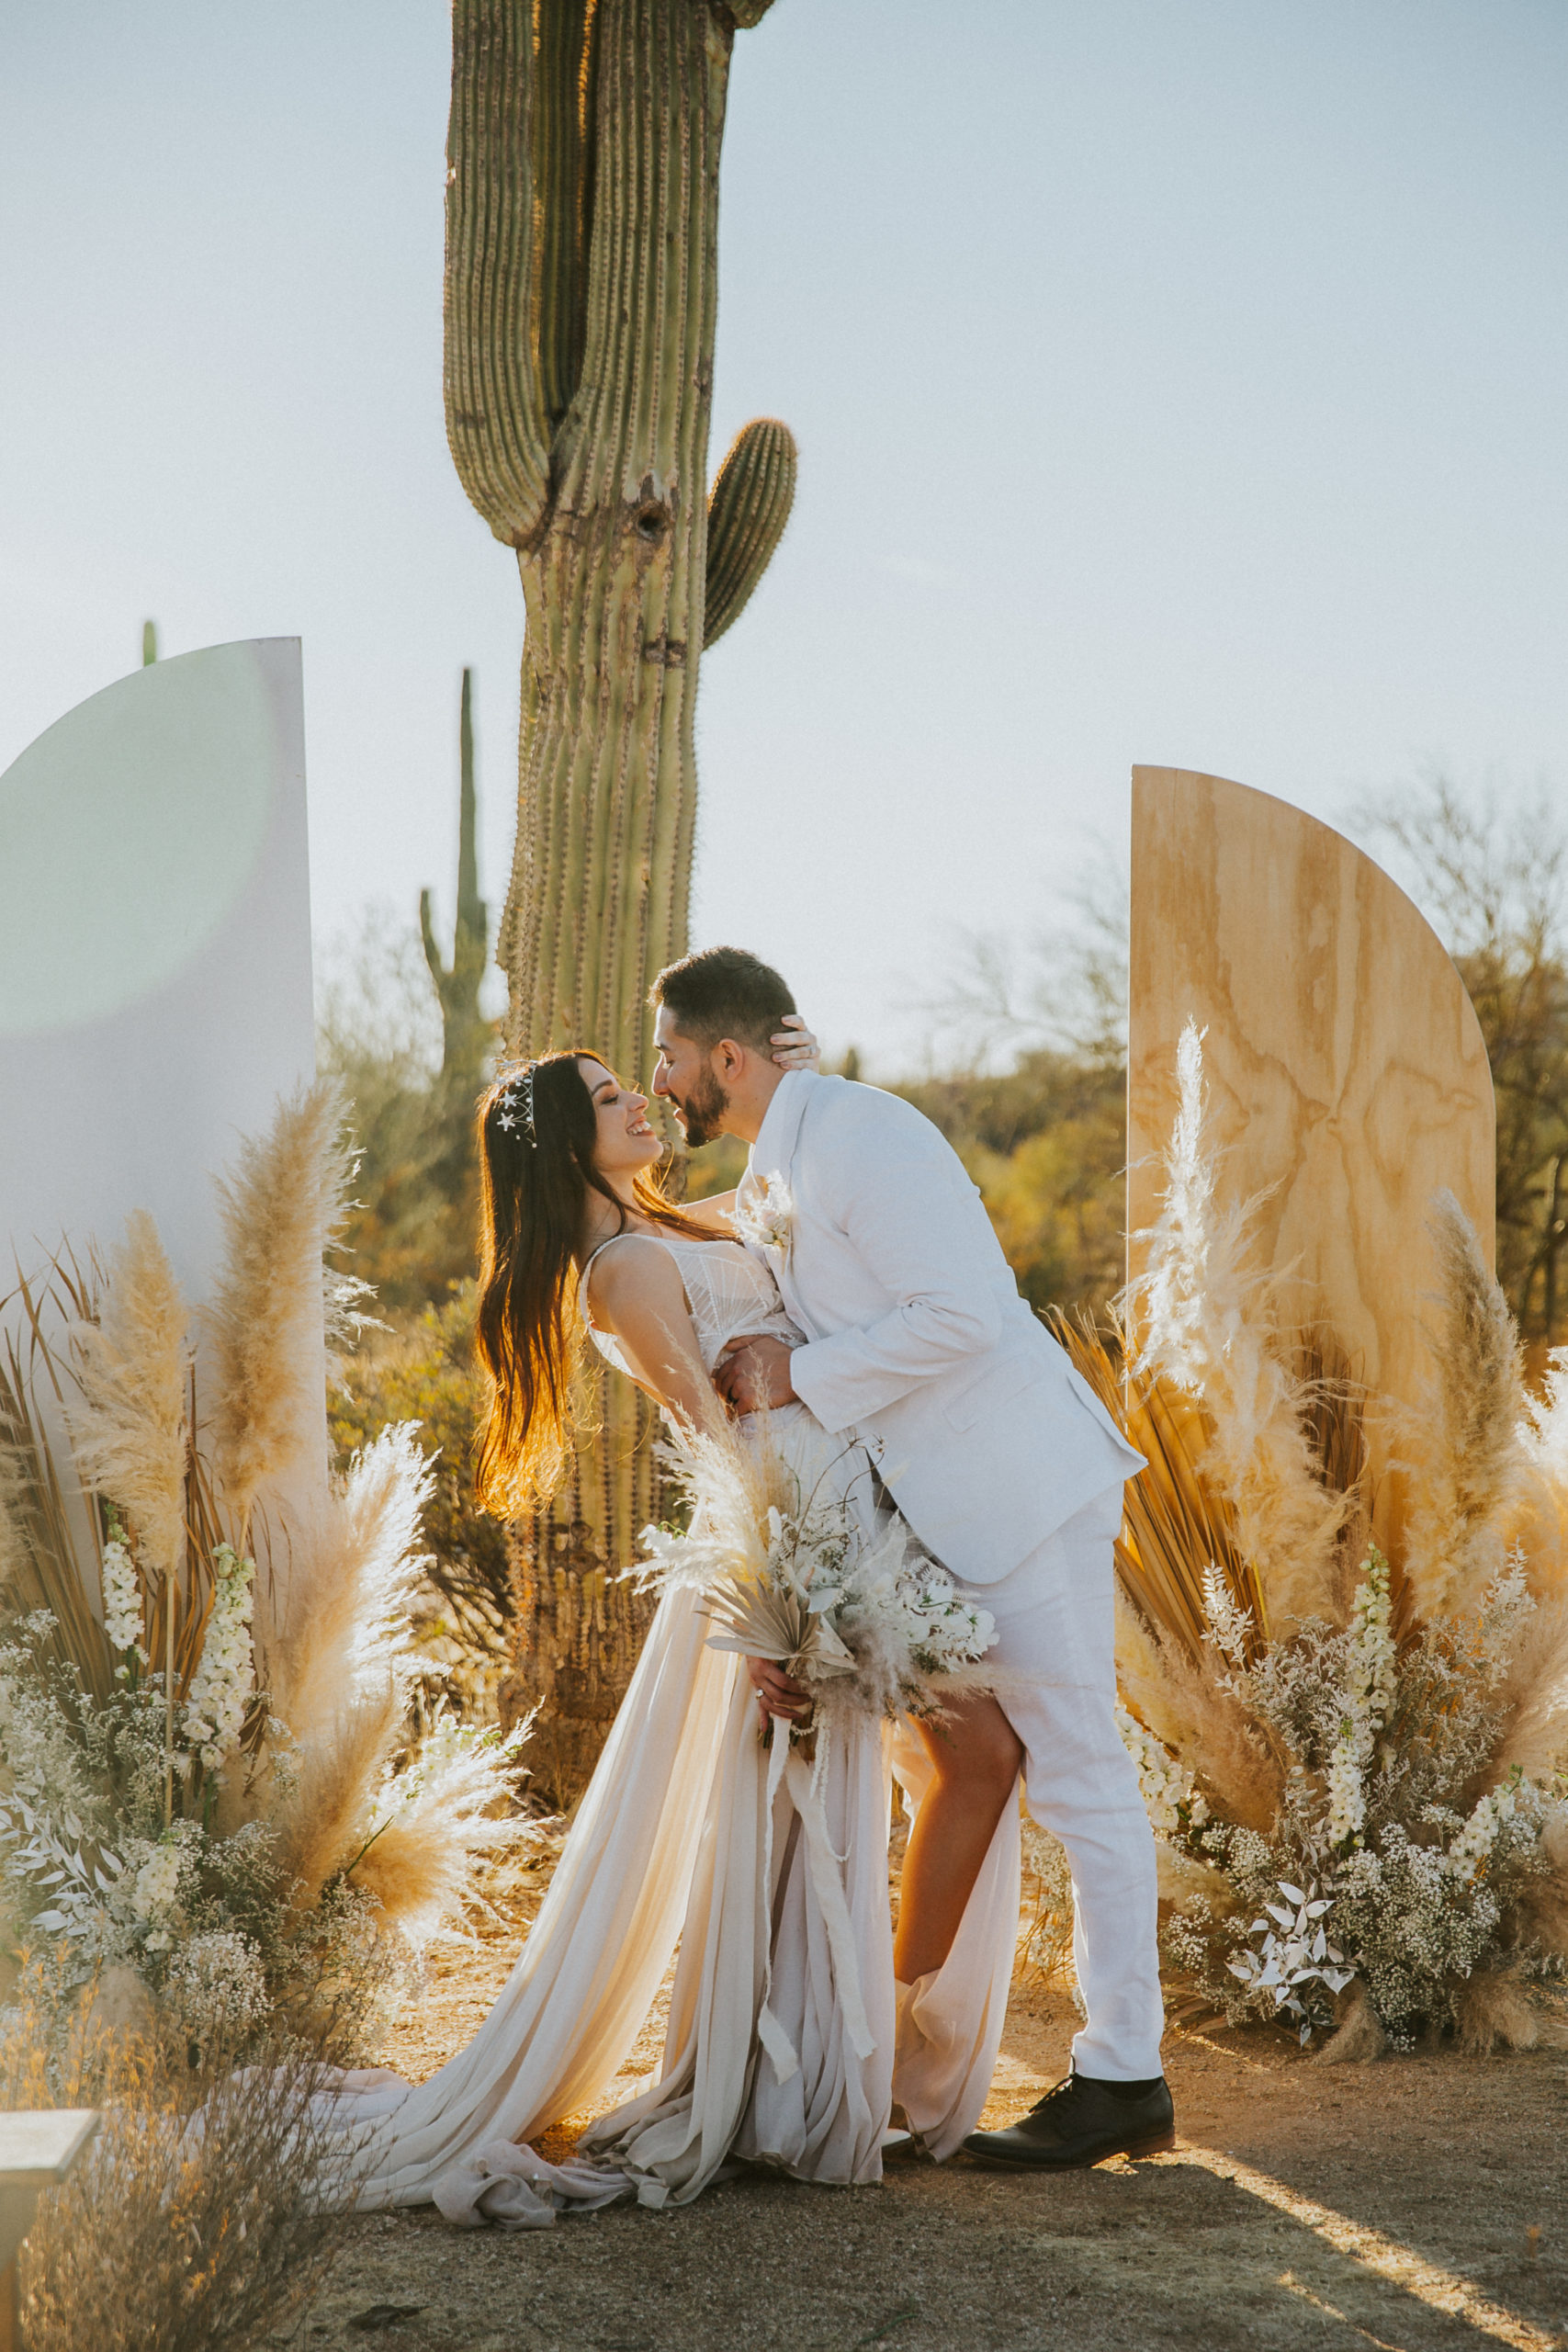 rebecca skidgel photography arizona wedding photgrapher golden hour boho desert bride and groom twilring dancing laughing smiling